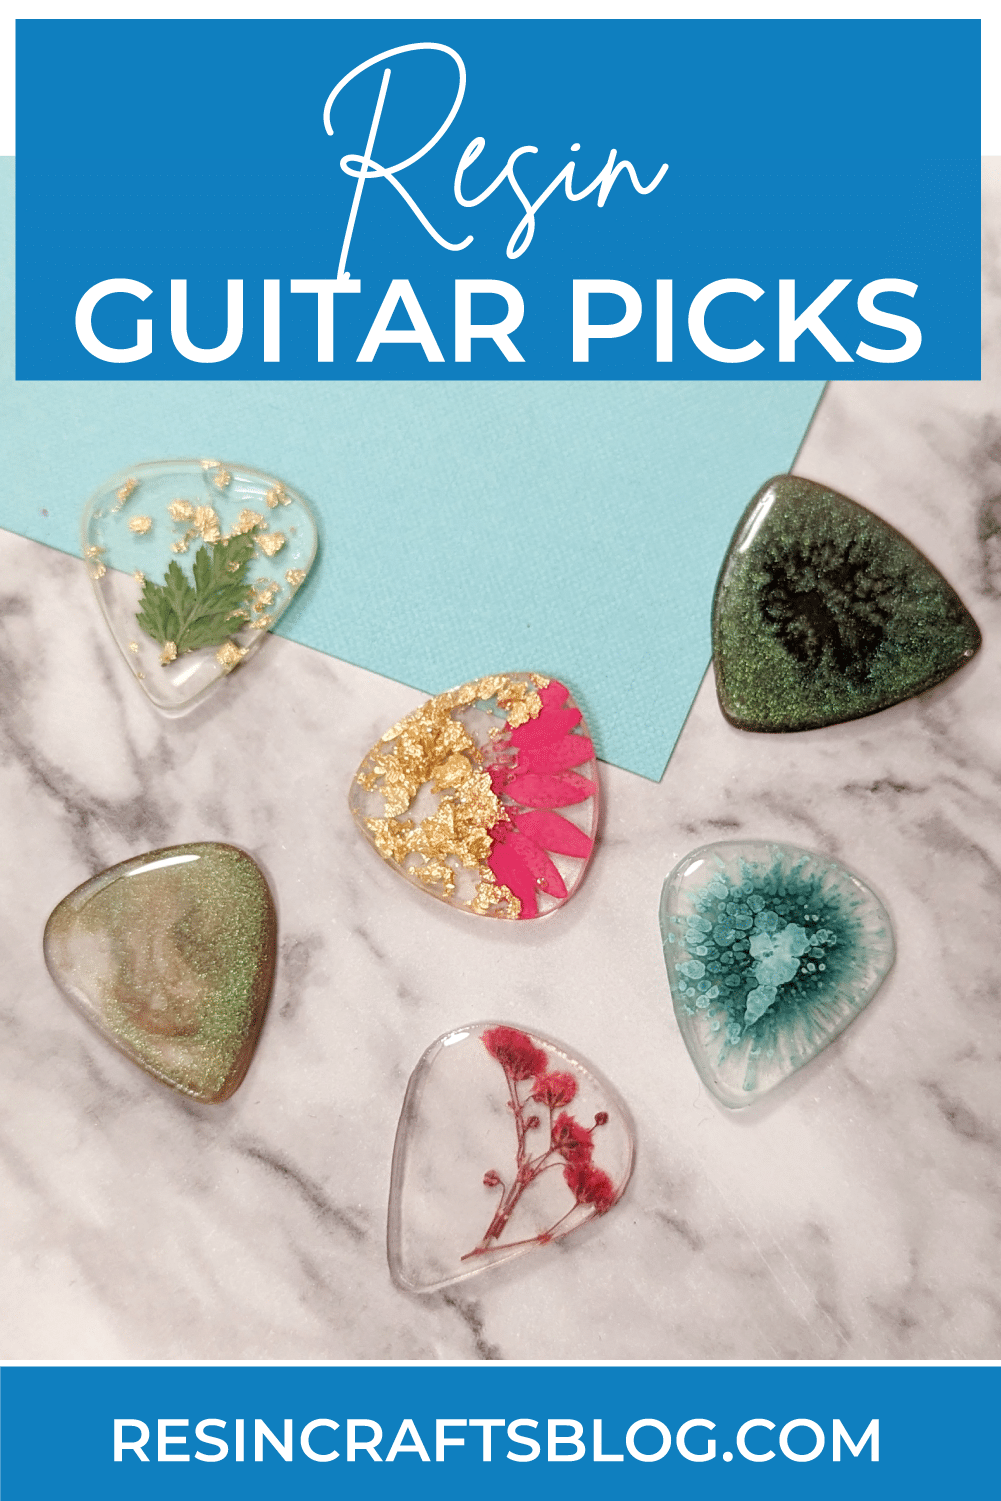 Look at all the ways you can customize resin guitar picks! via @resincraftsblog